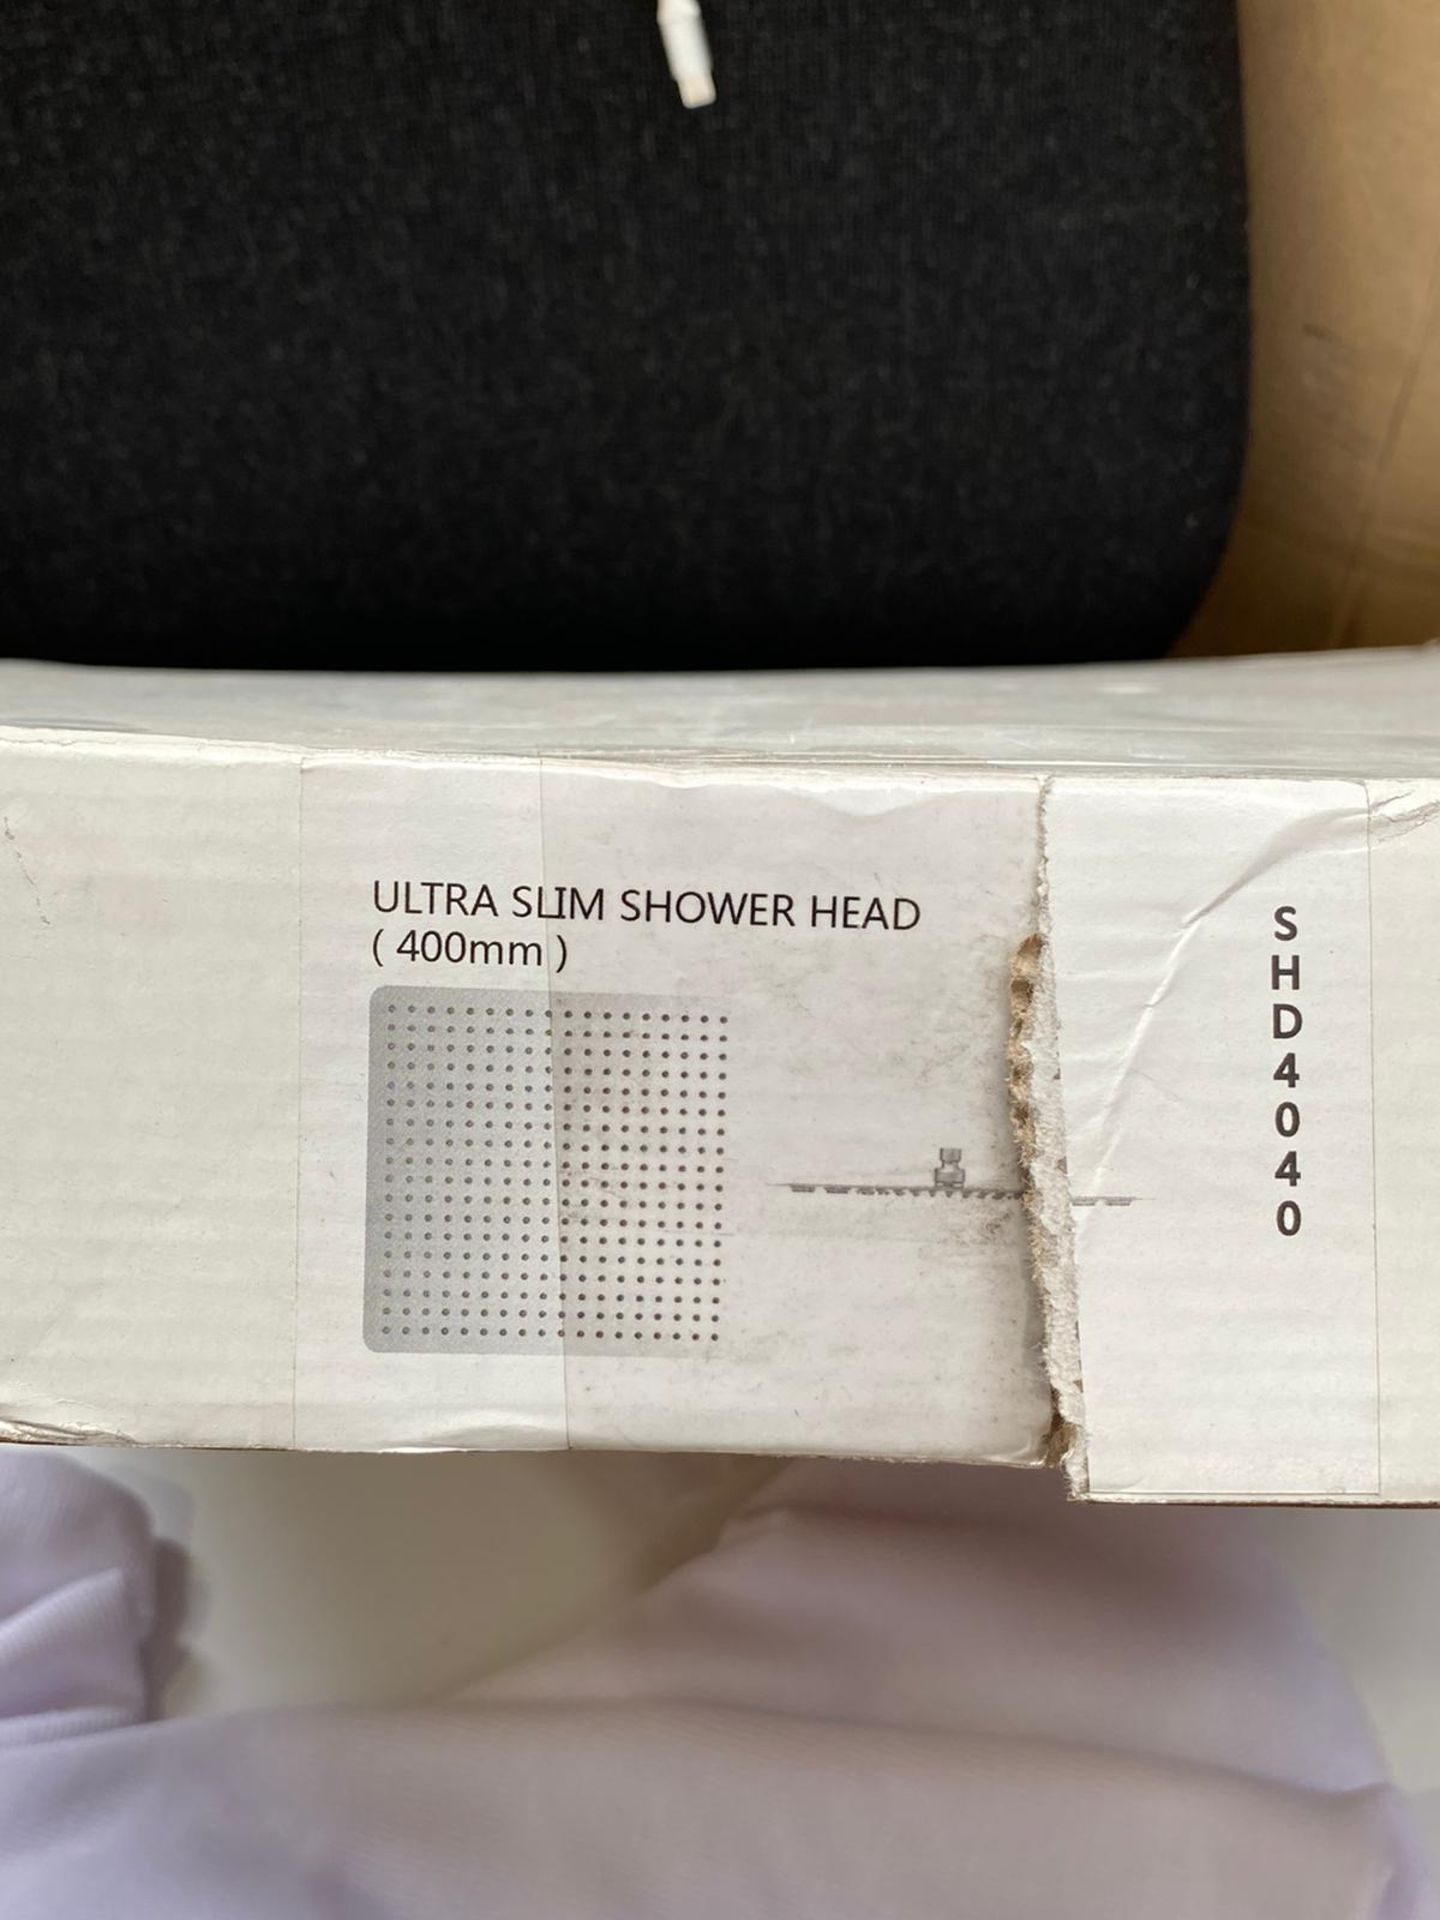 1 x Square Ultra Thin Shower Head (400mm) - New Boxed Stock - Location: Altrincham WA14 - - Image 3 of 4